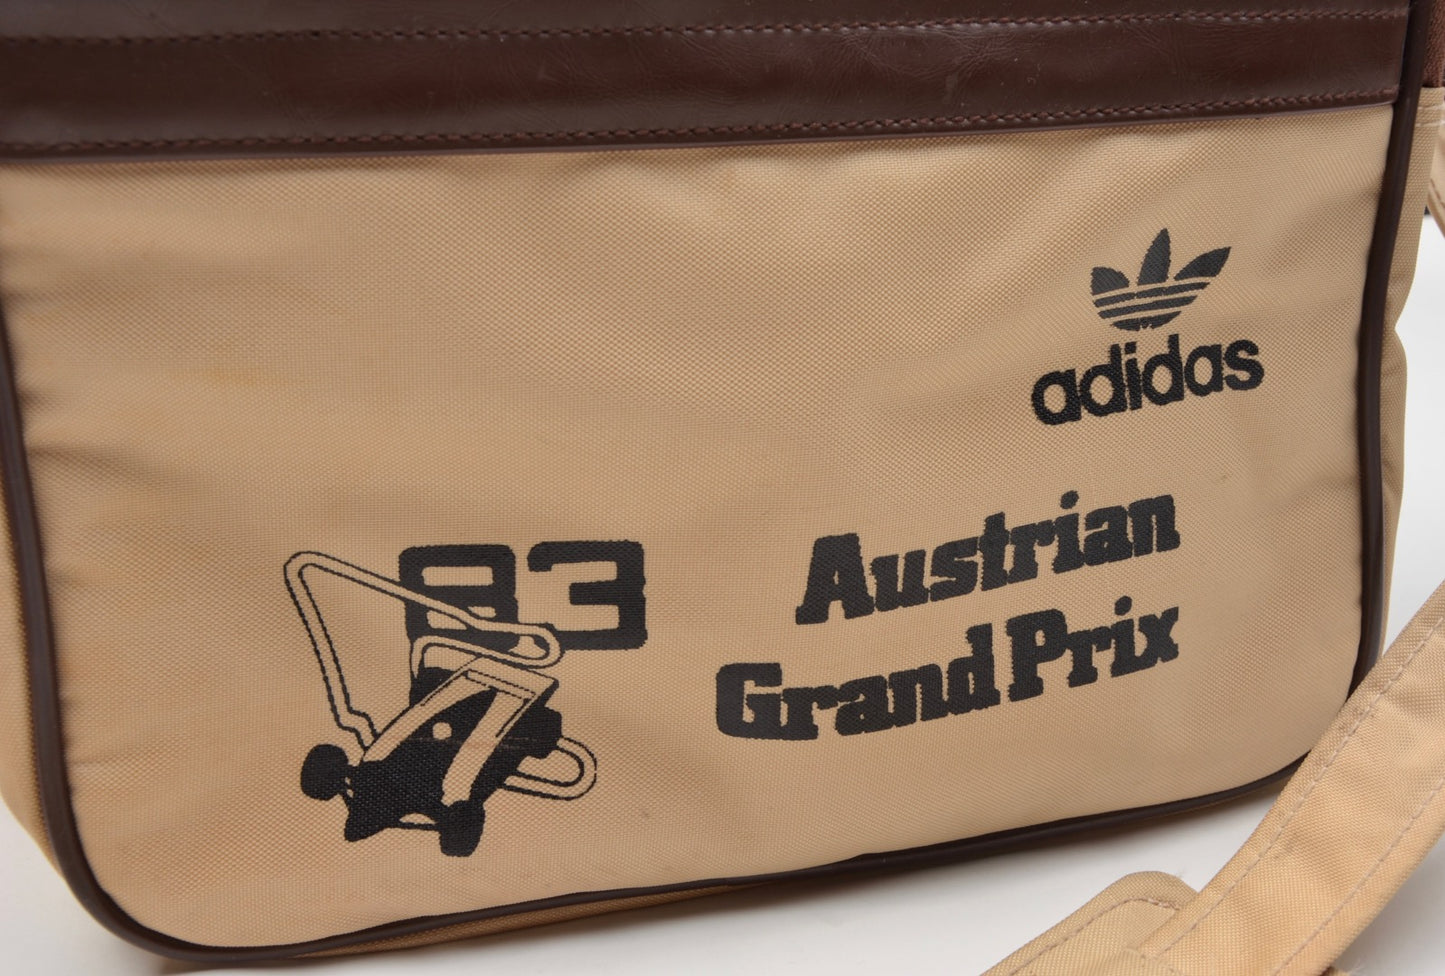 Vintage Adidas 1983 Austrian Grand Prix Bag - Beige